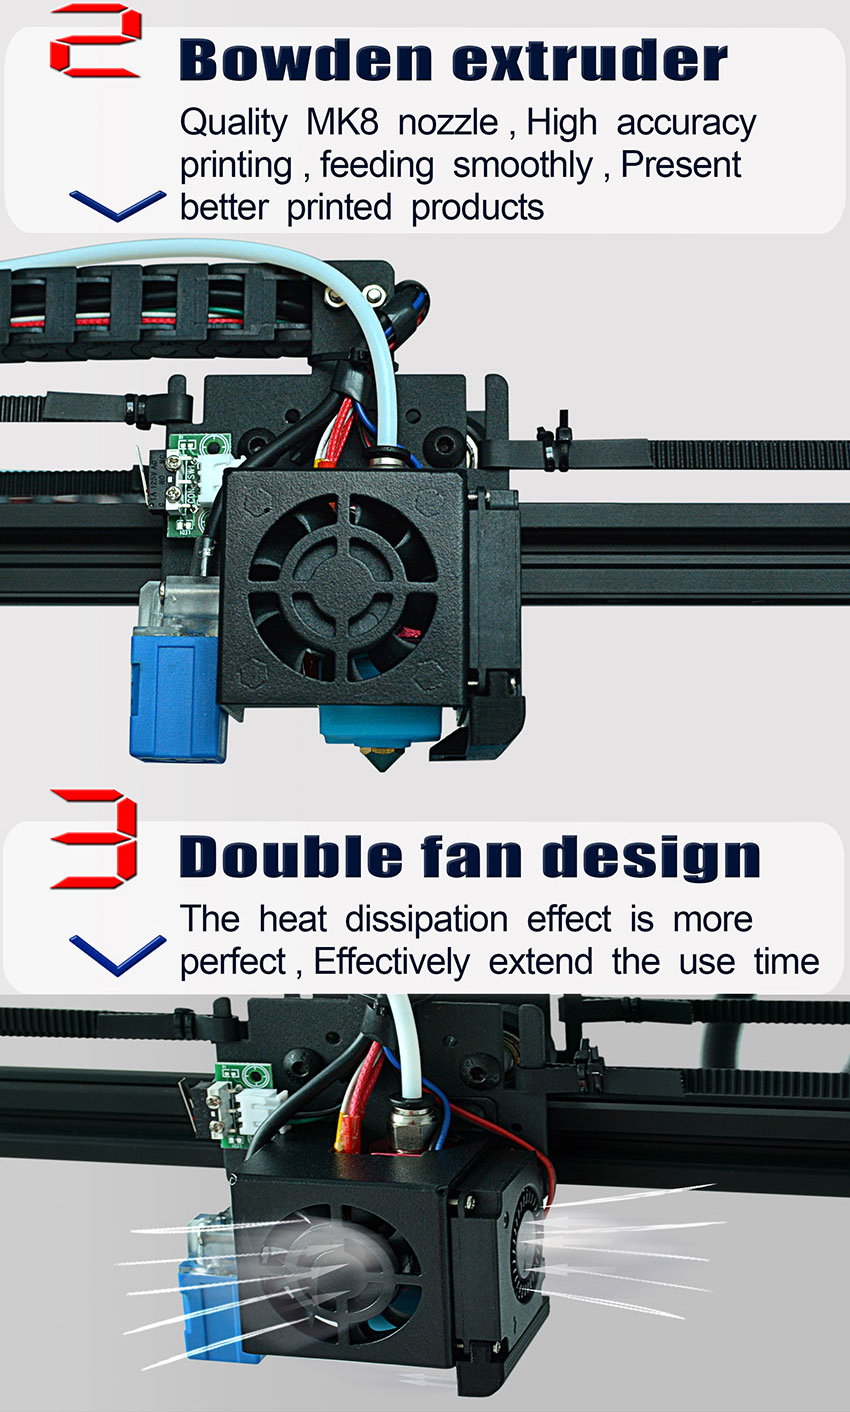 [EU/US Direct]TRONXY® X5SA-400 DIY 3D Printer Kit 400*400*400mm Large Printing Size Touch Screen Auto Leveling